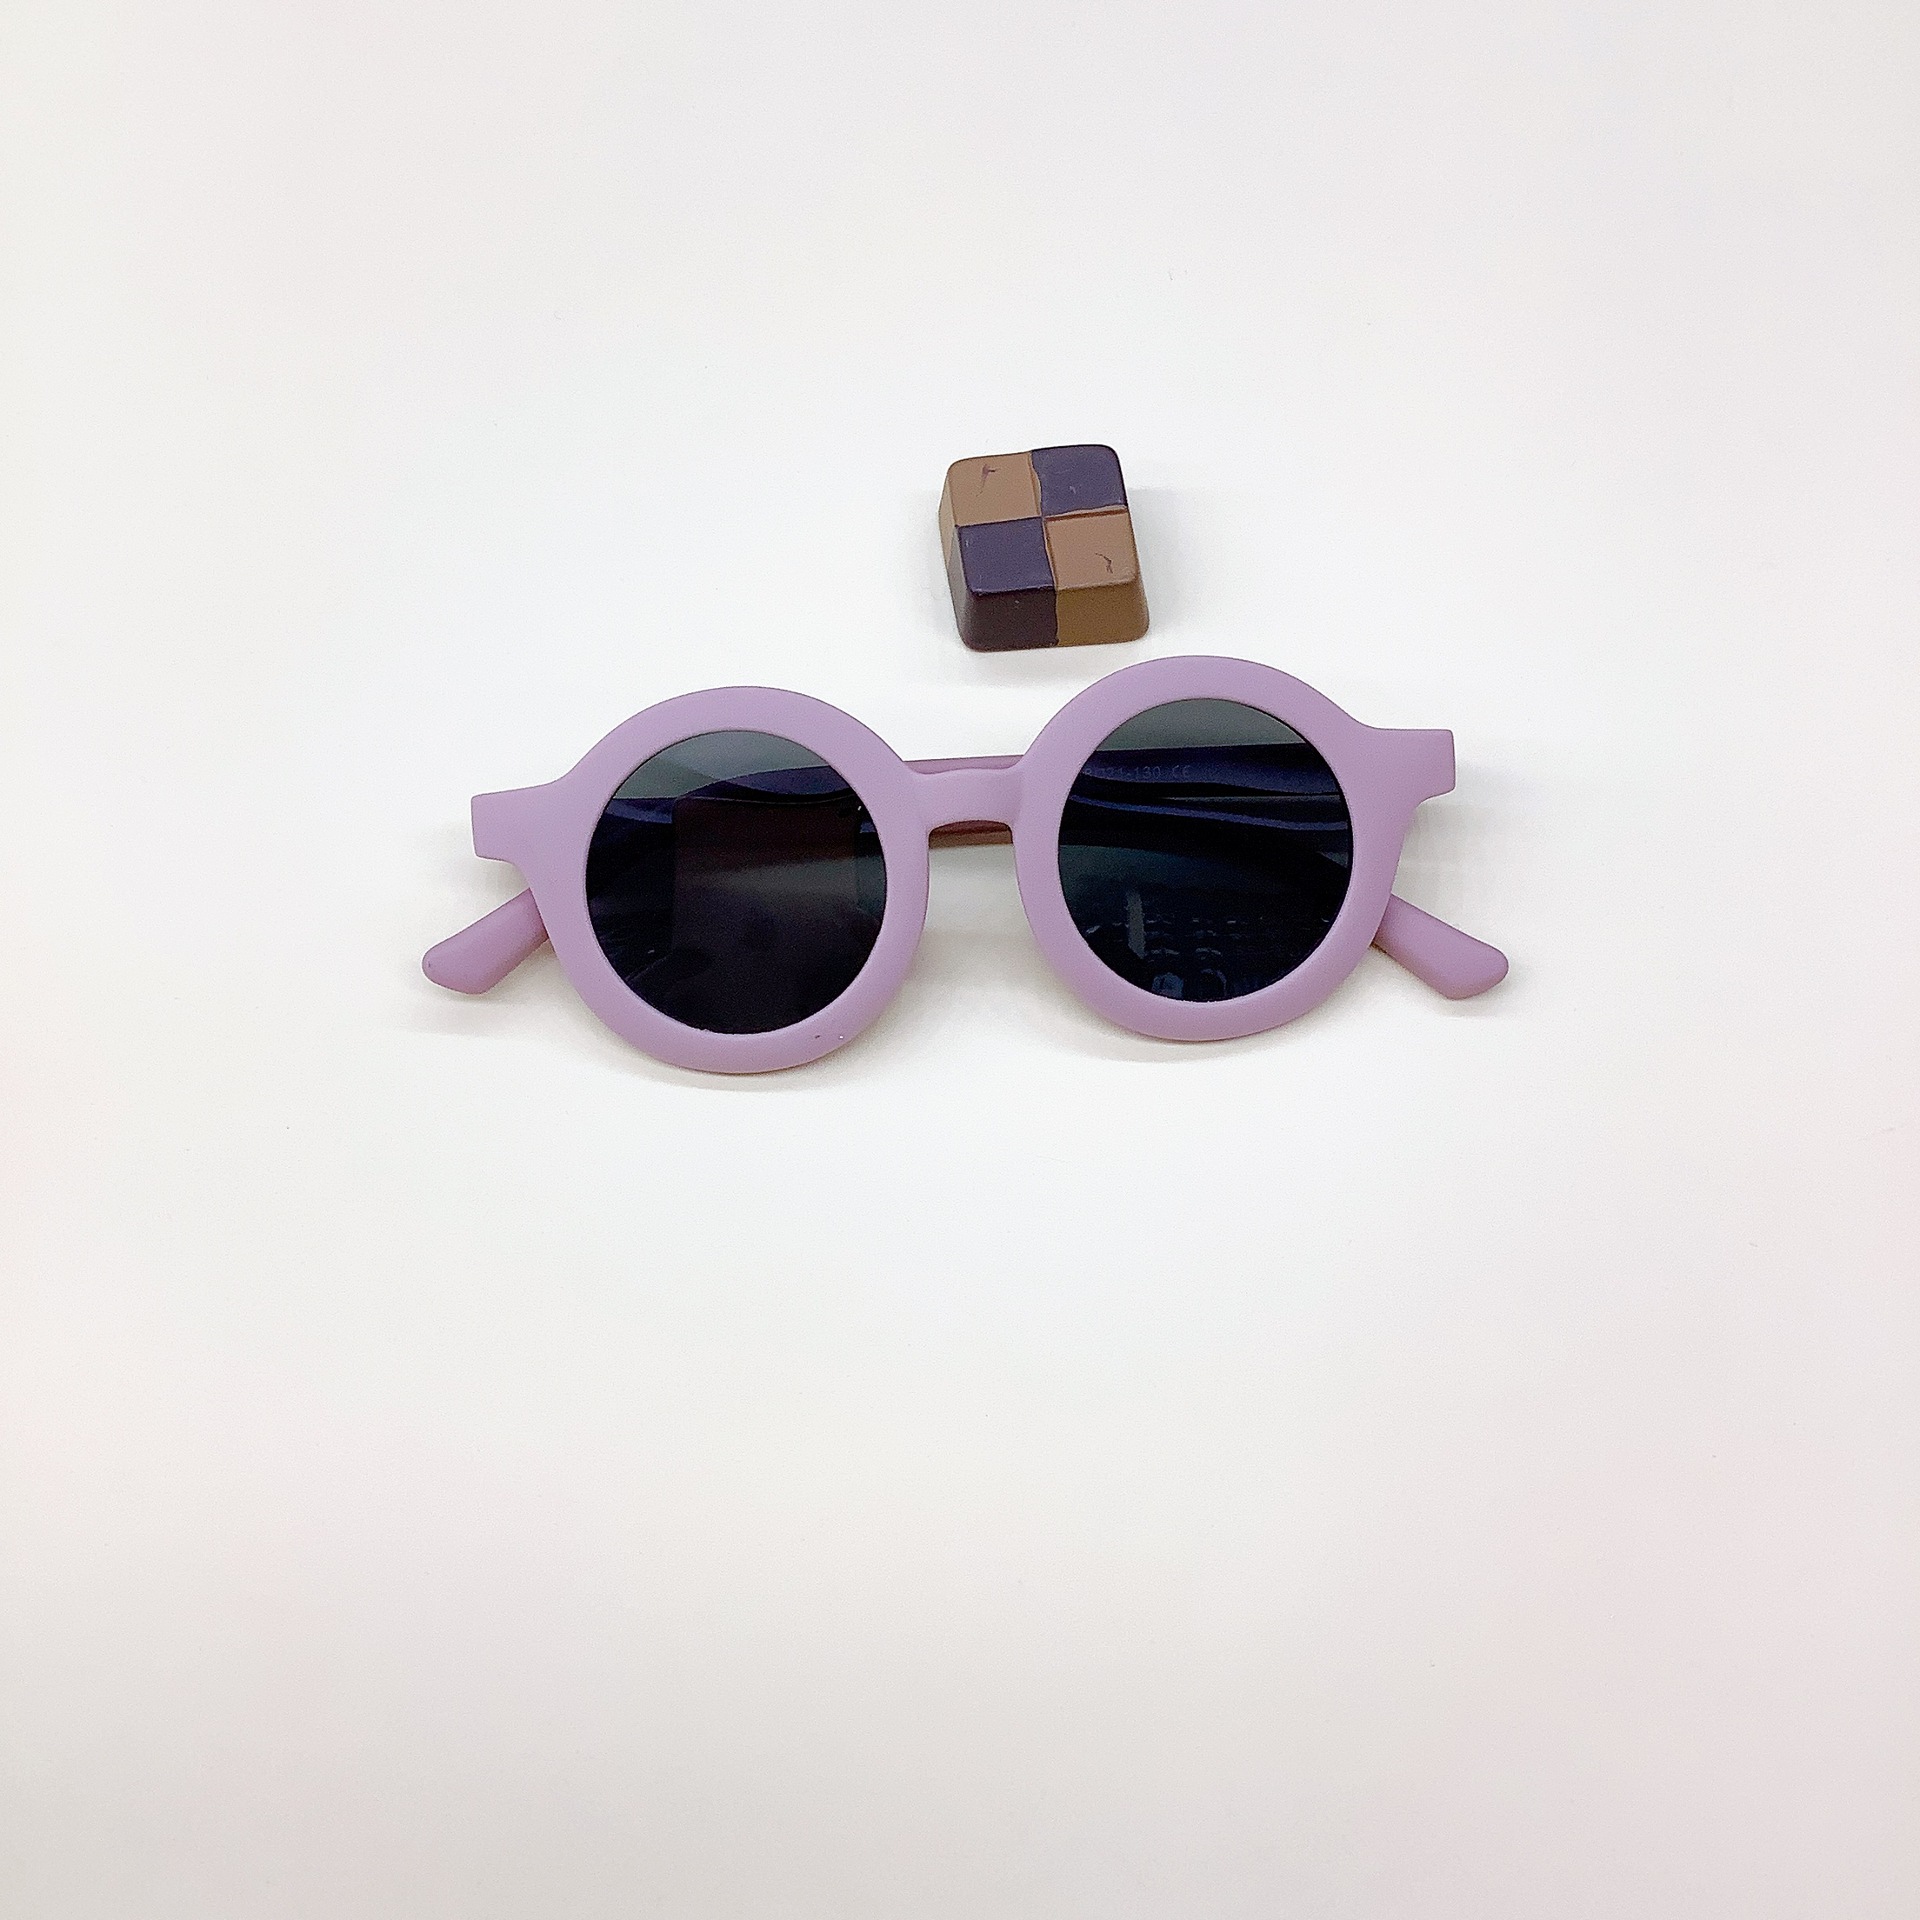 New Kids Sunglasses Silicone round Frame Kids' Sunglasses Boys Girls Glasses UV Protection Polarized Sunglasses